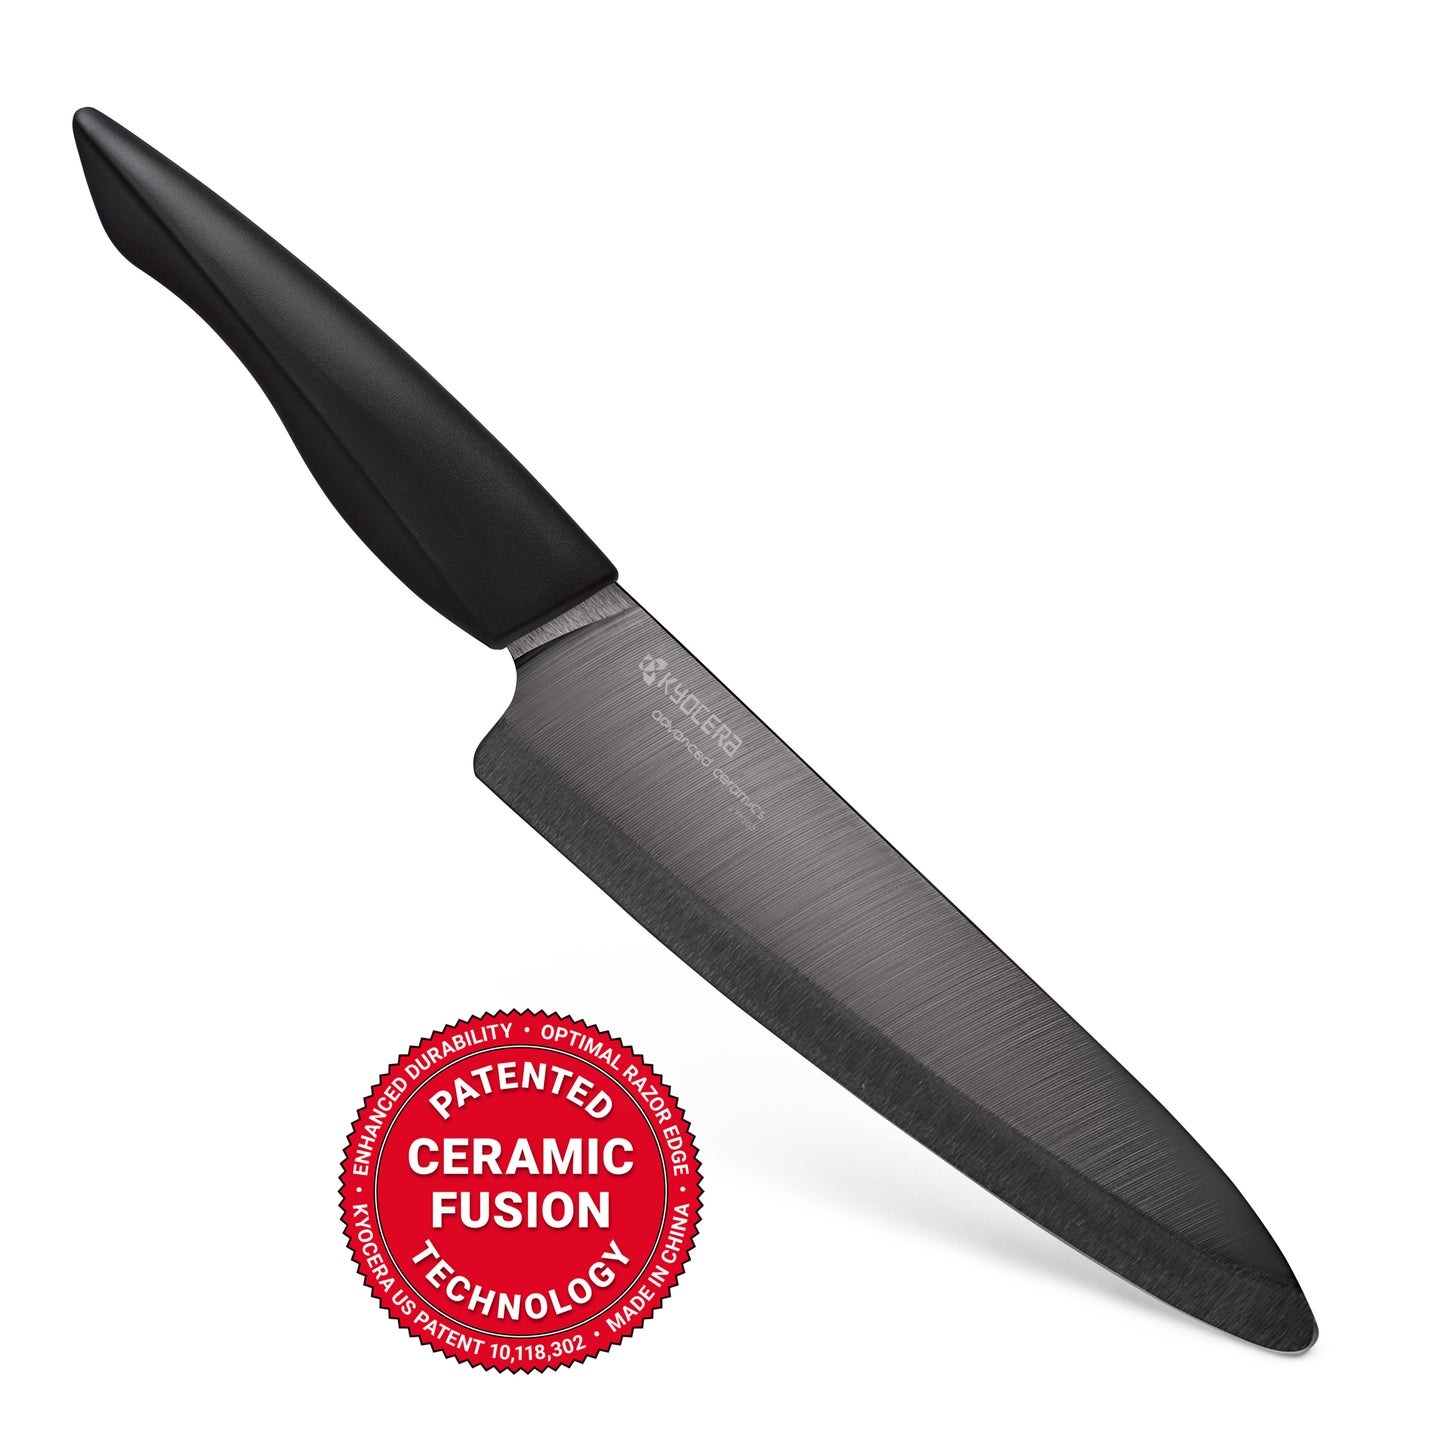 Kyocera Innovation 7" Ceramic Chef's Knife